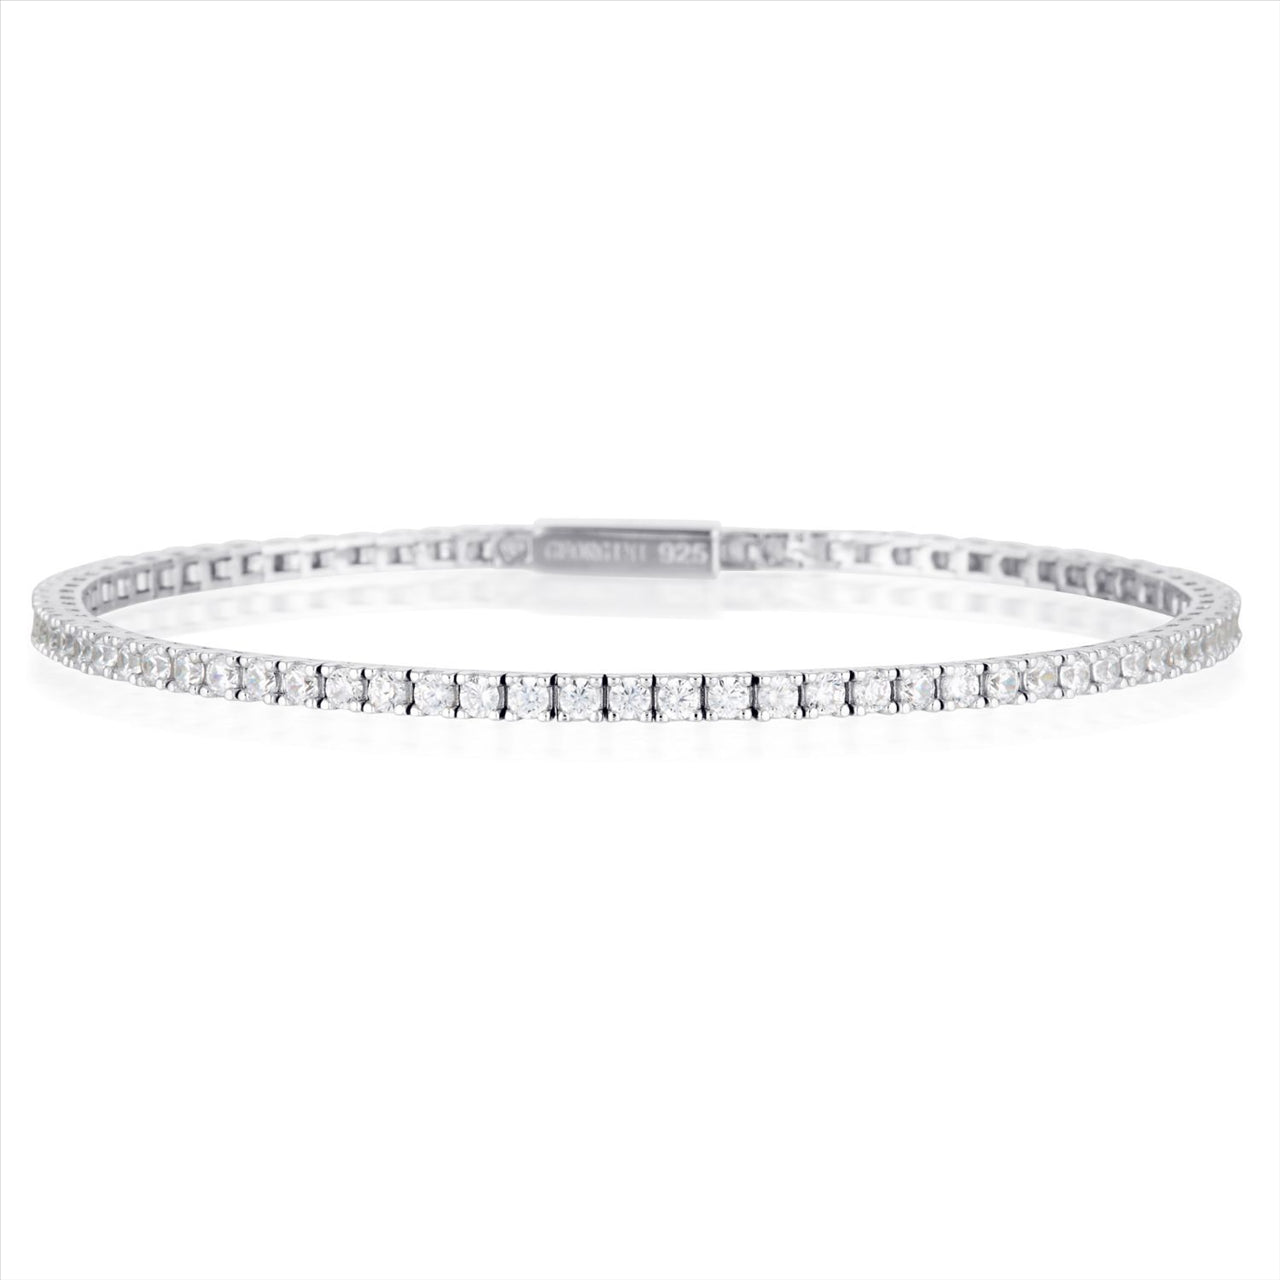 Georgini Selena 2mm Silver Bracelet